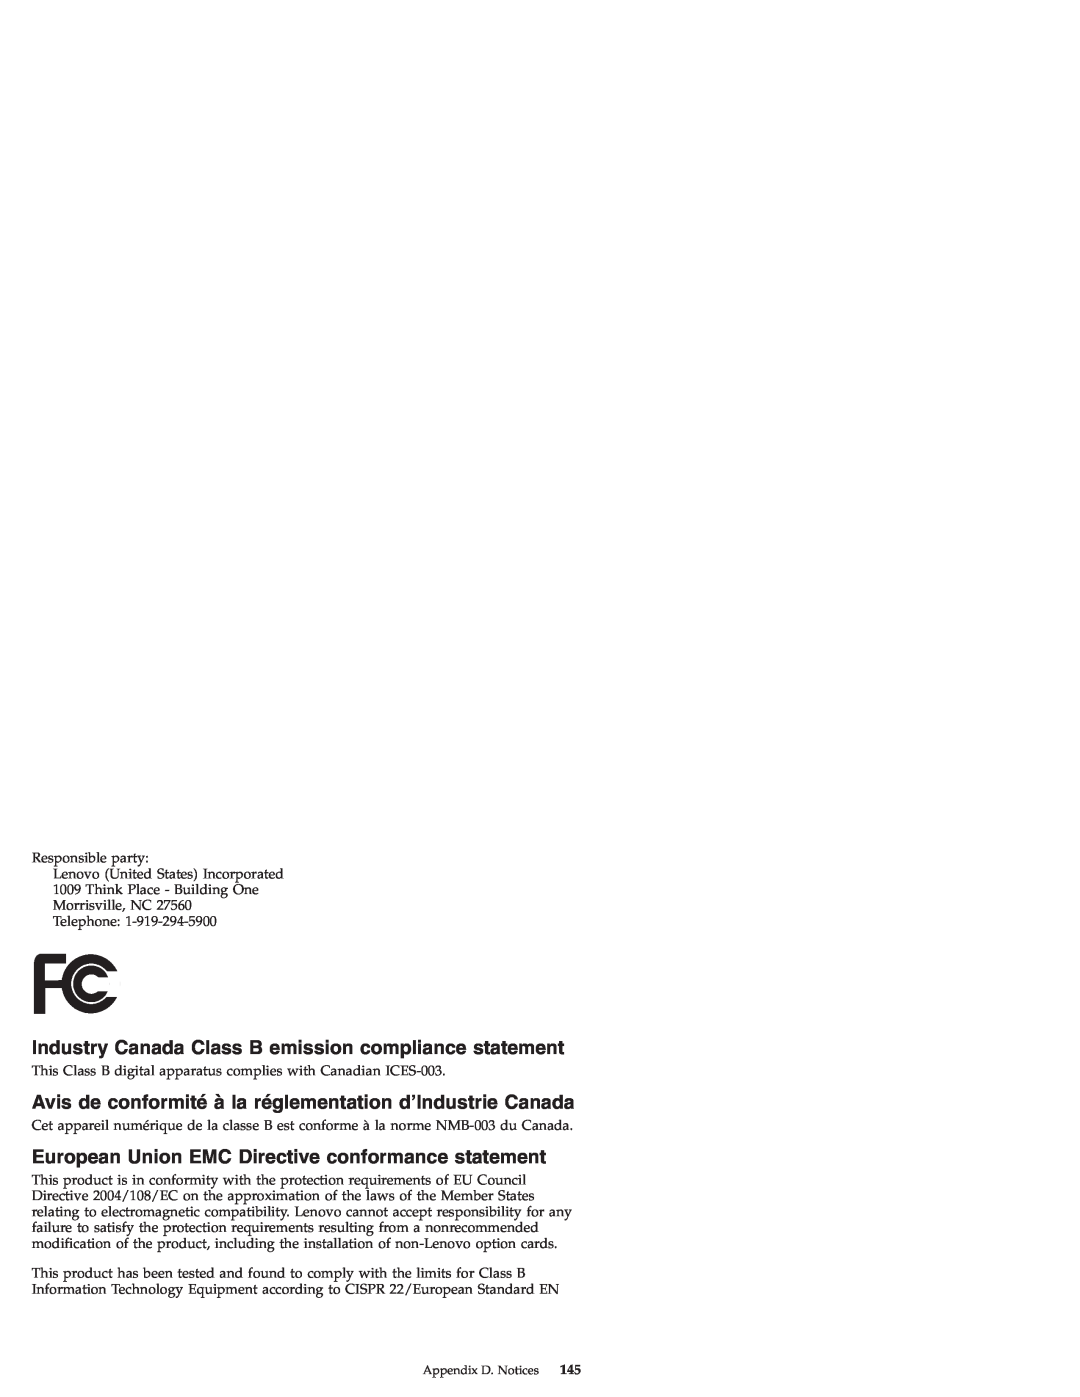 Lenovo S9E, S10E Industry Canada Class B emission compliance statement, European Union EMC Directive conformance statement 